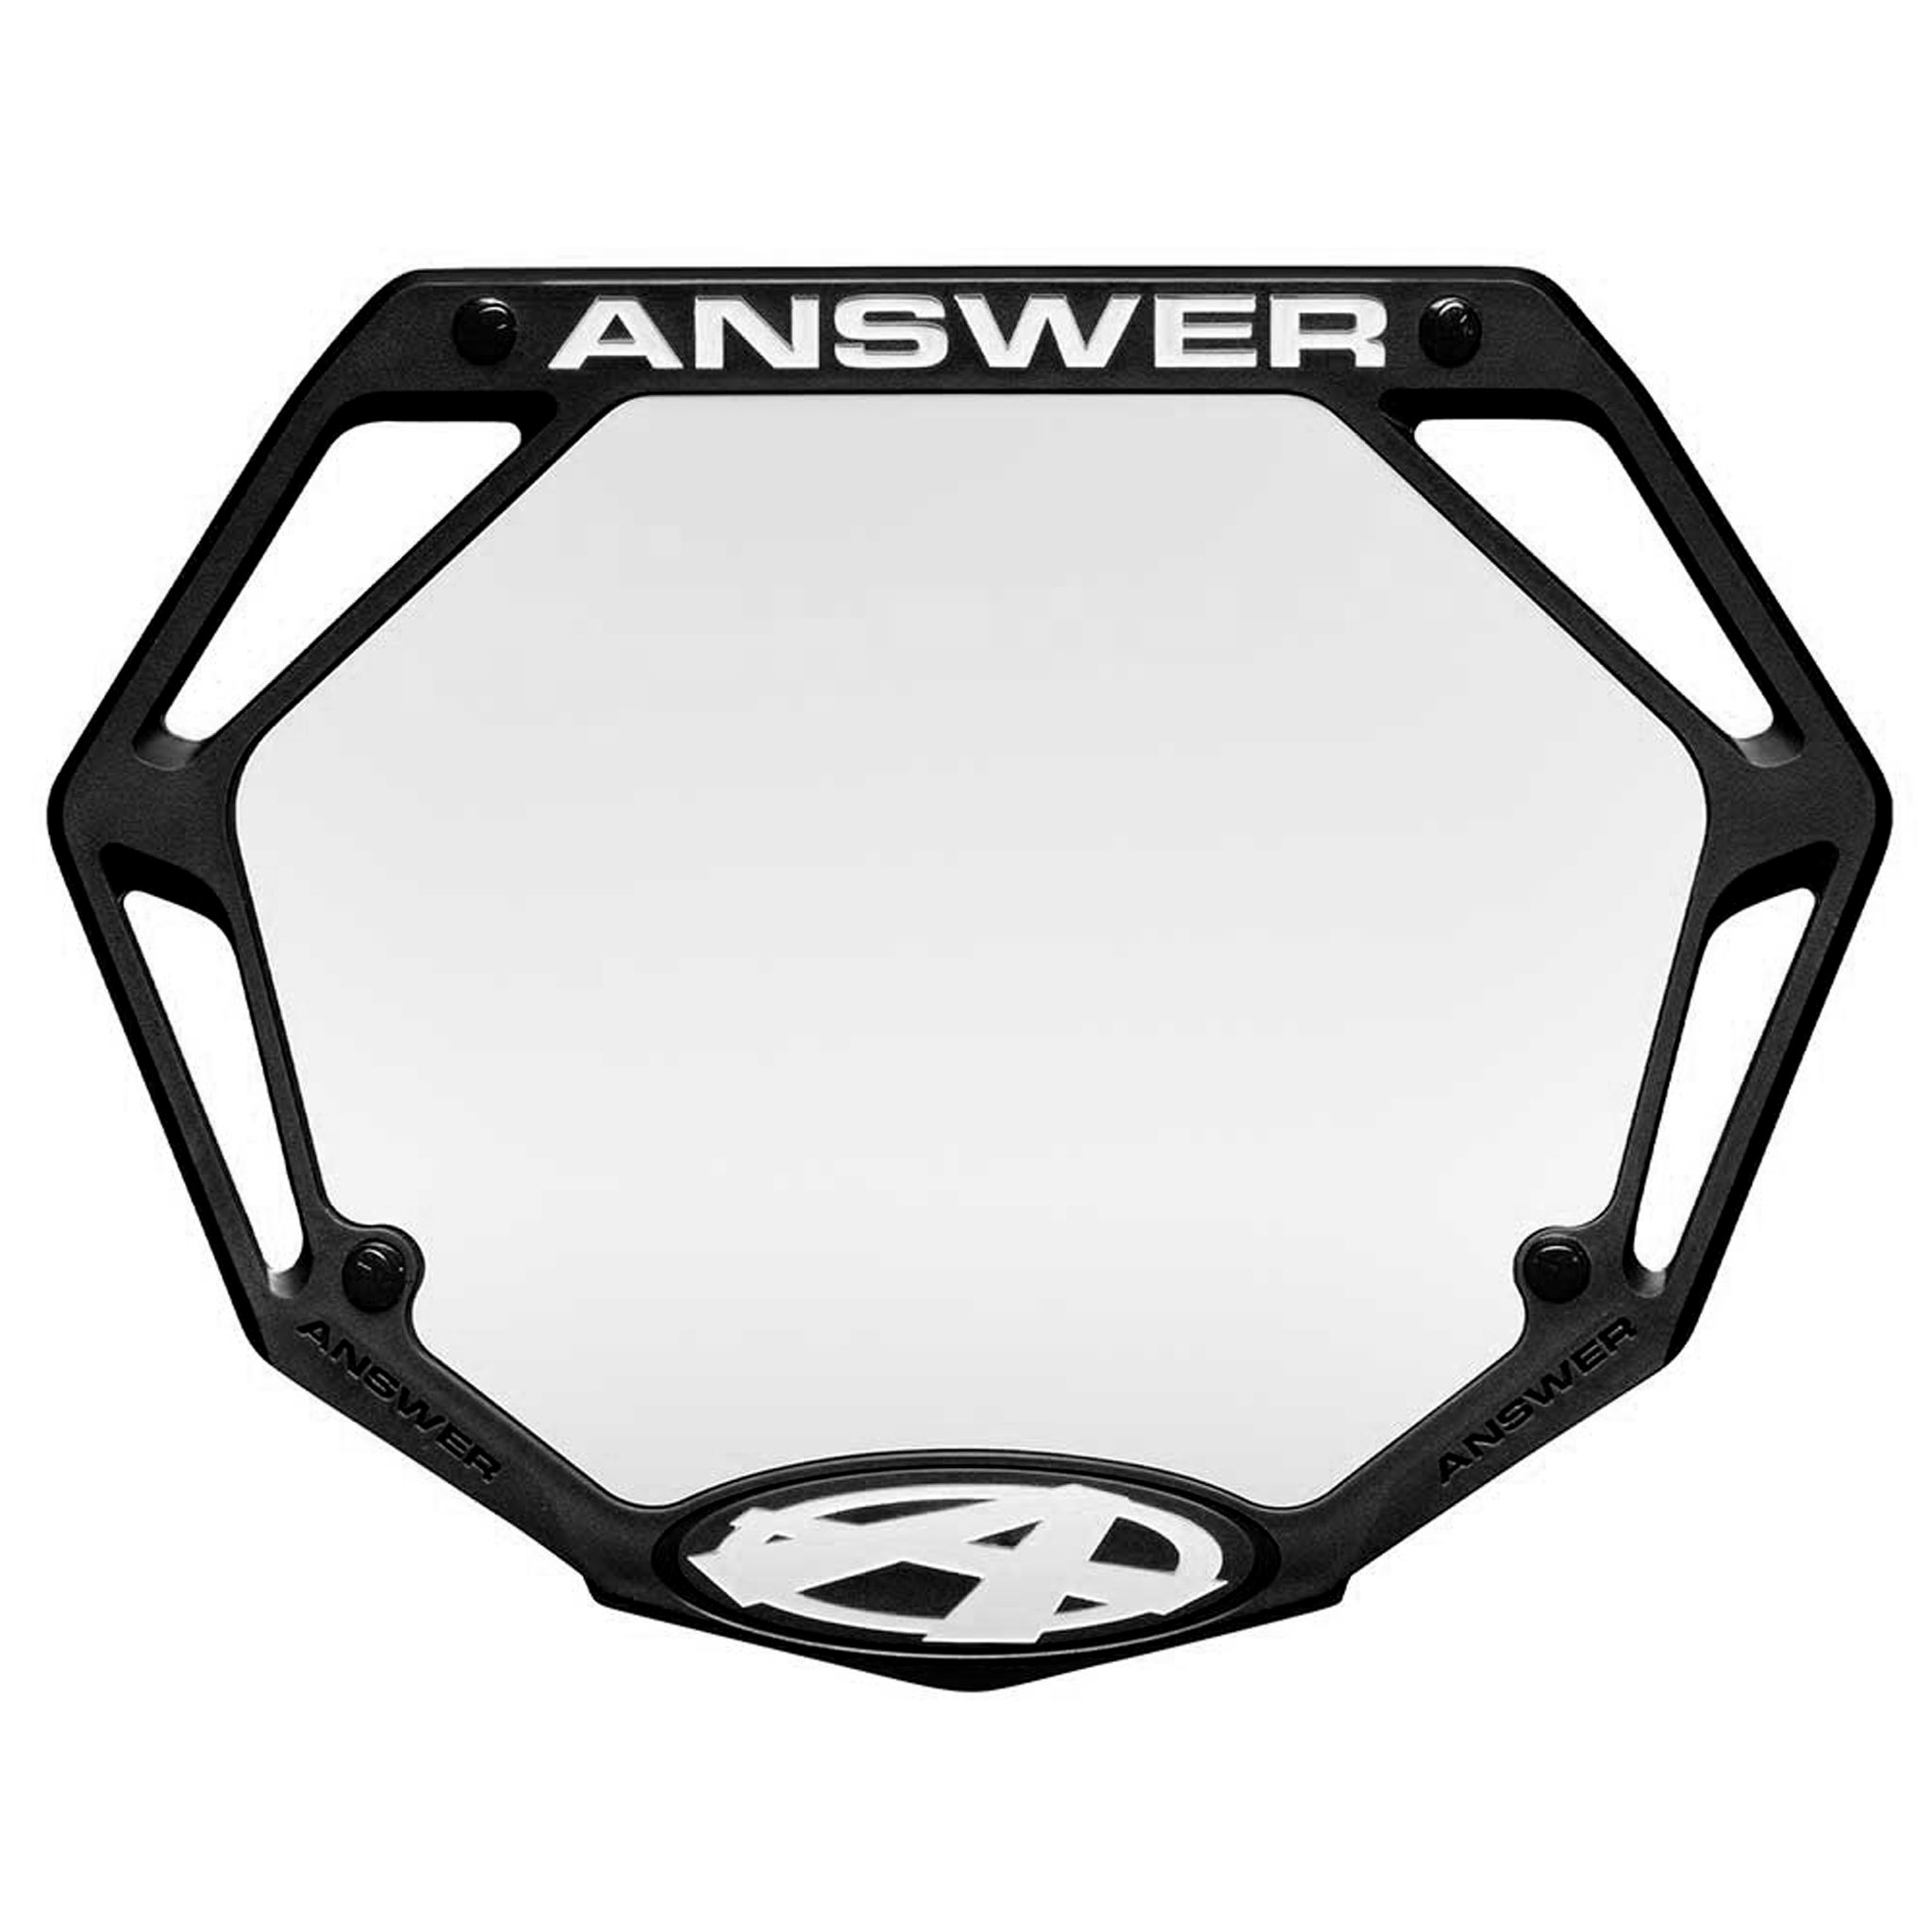 AnswerBMX 3D Number Plate, Mini, Black